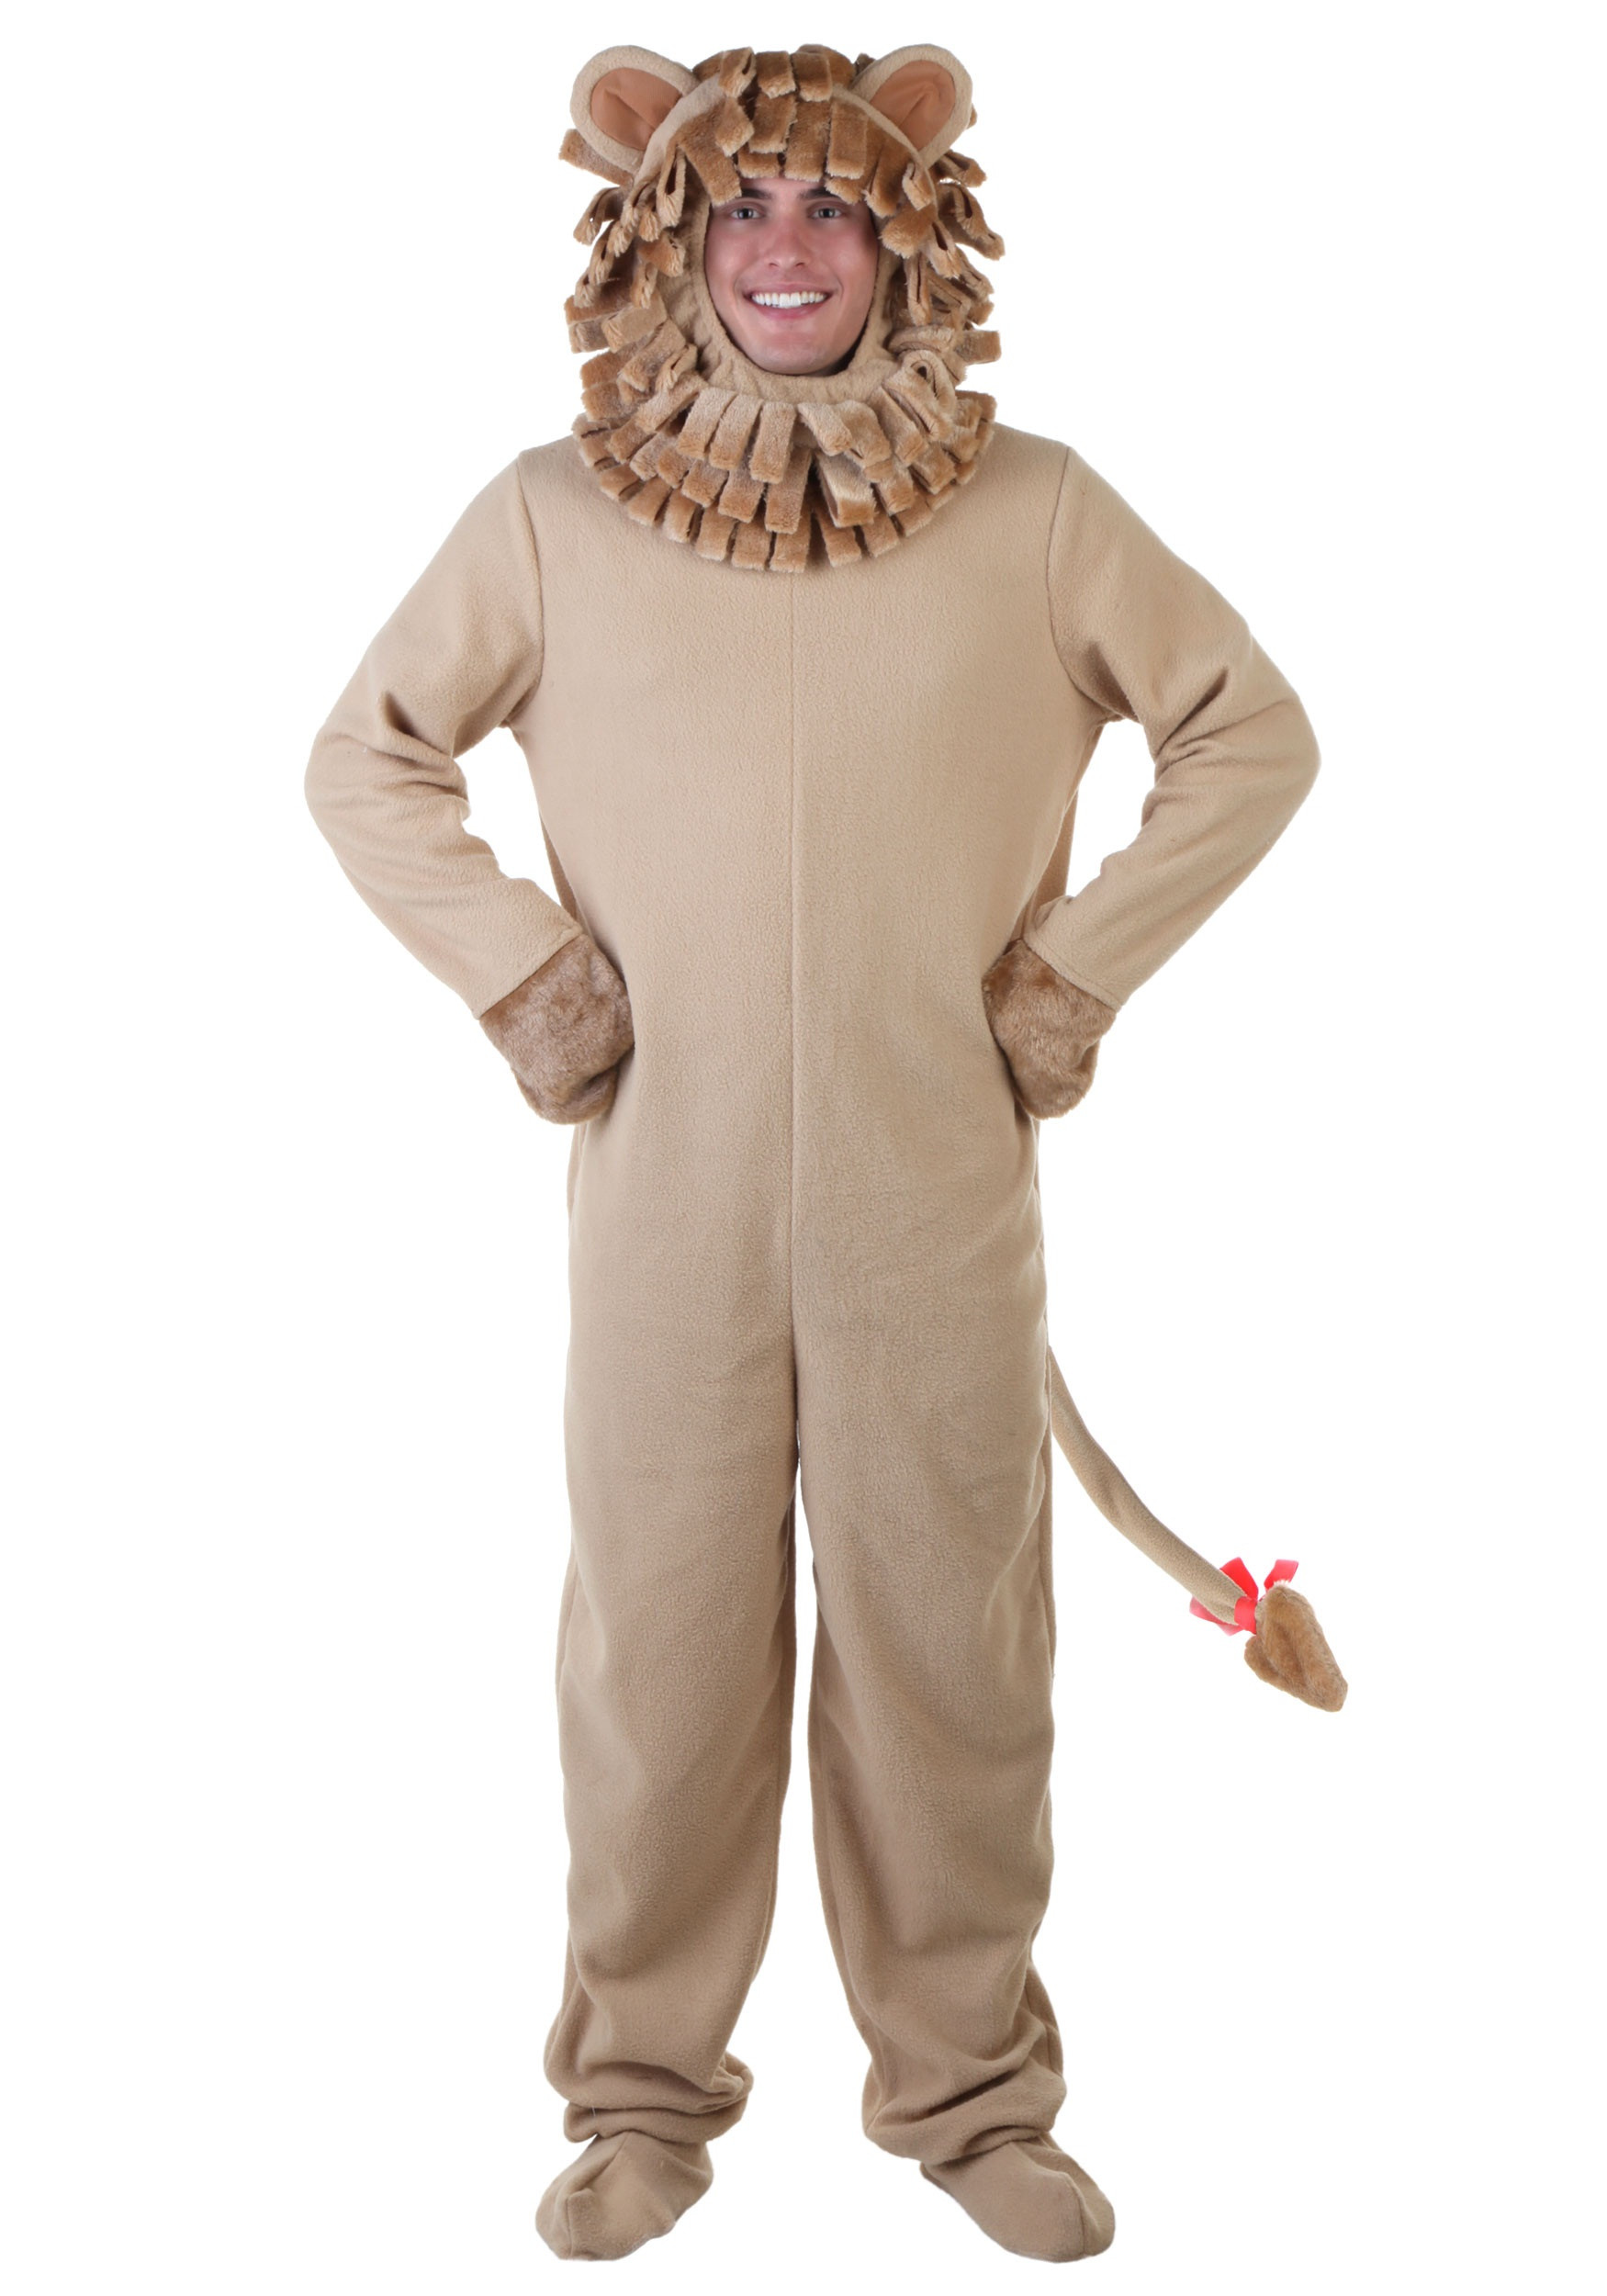 DIY Adult Lion Costume
 Adult Lion Costume